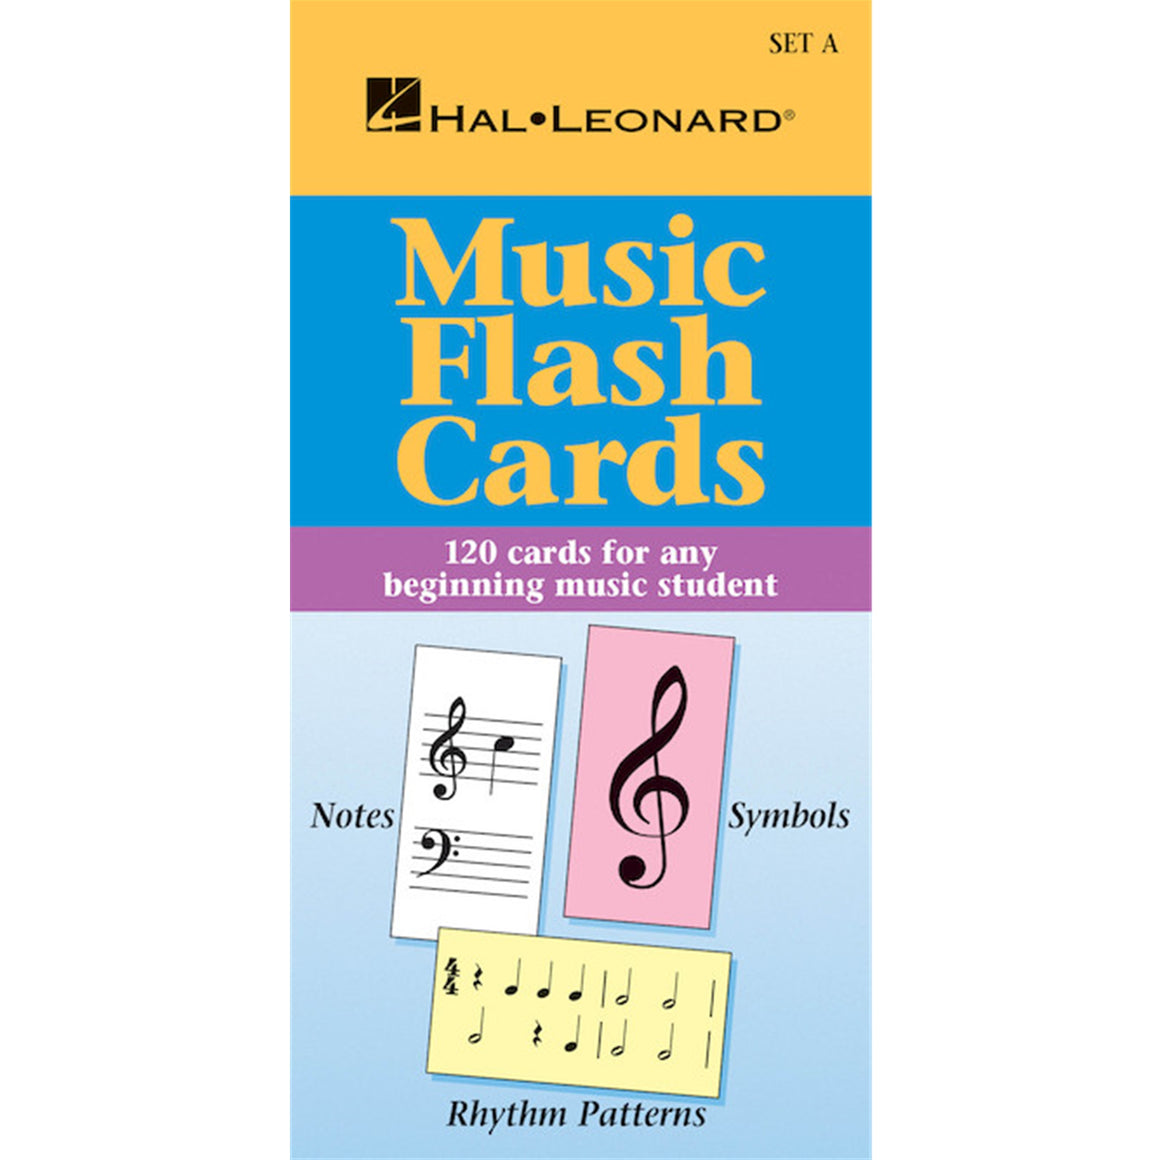 HAL LEONARD 296034 Music Flash Cards - Set A